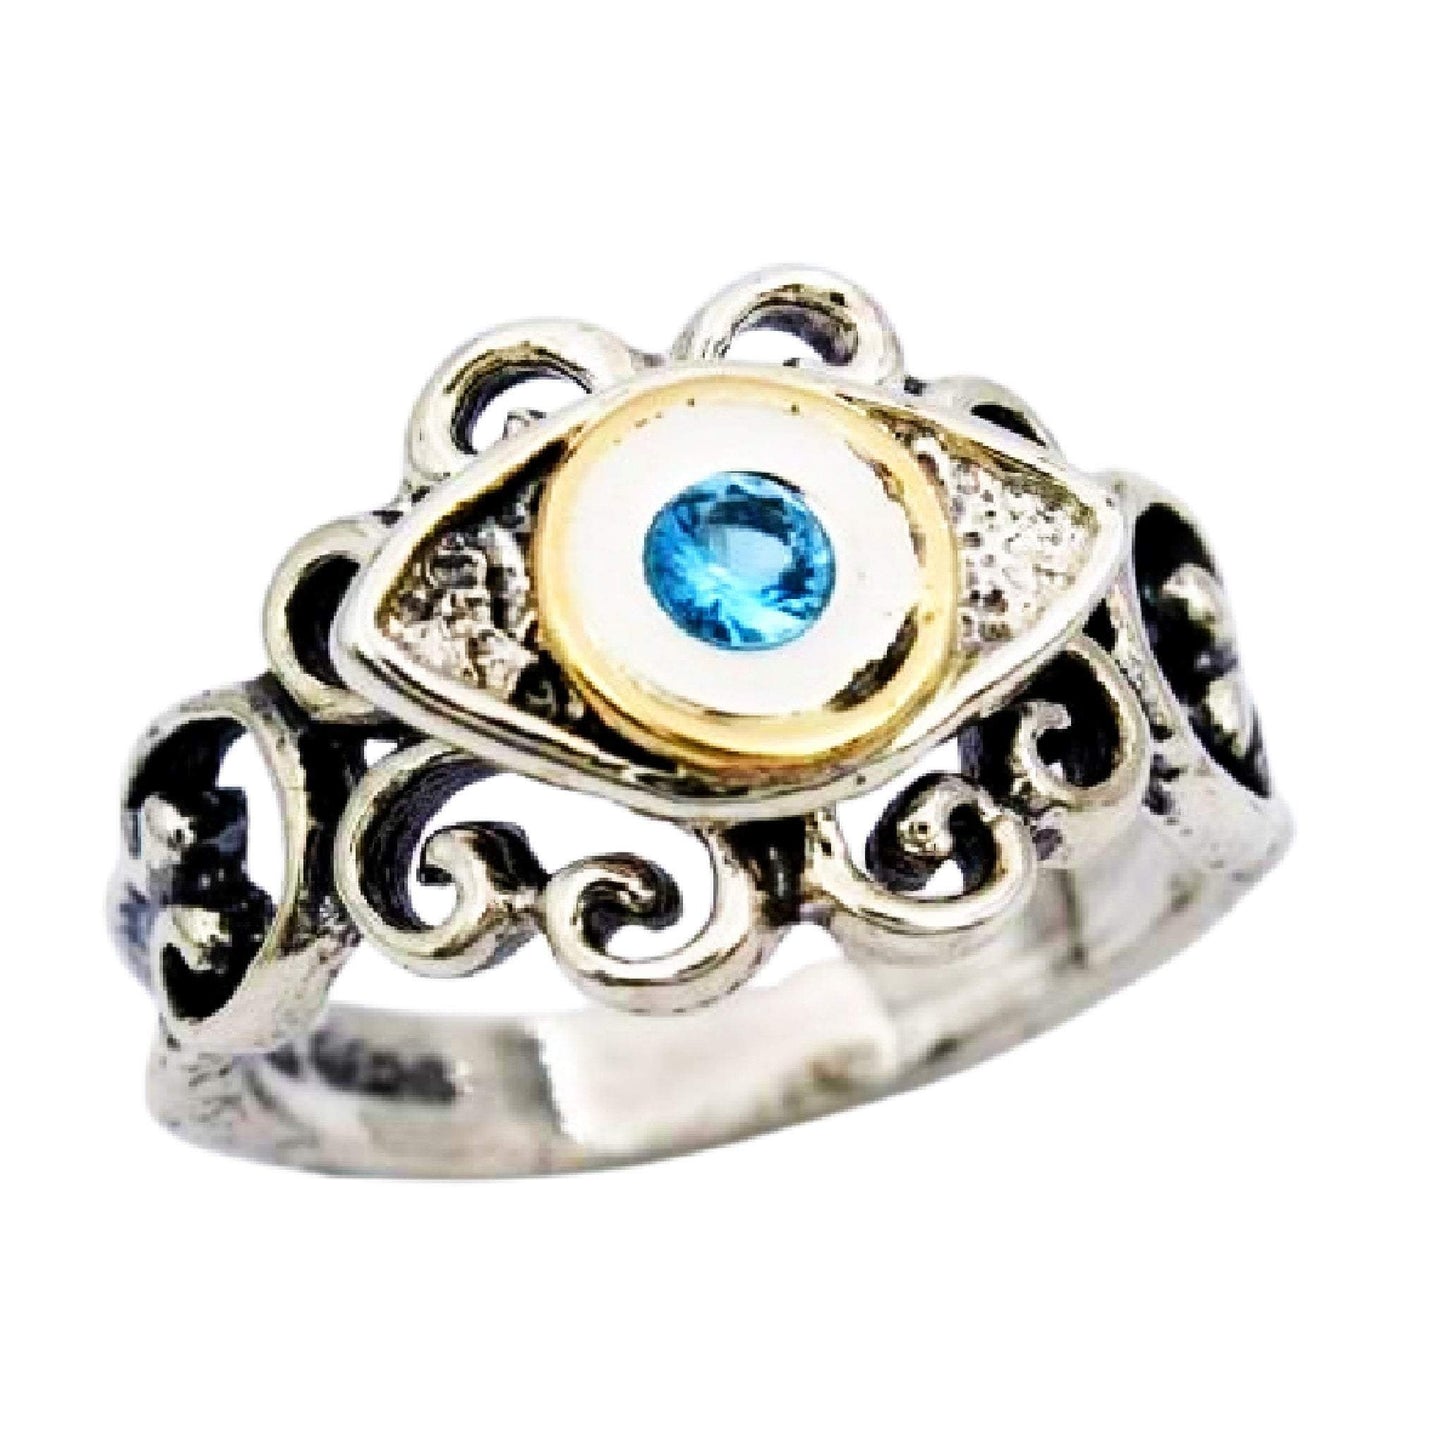 Bluenoemi Jewelry Rings SH021 -Bluenoemi - Eye silver rings for women - Israeli Luck & Protection